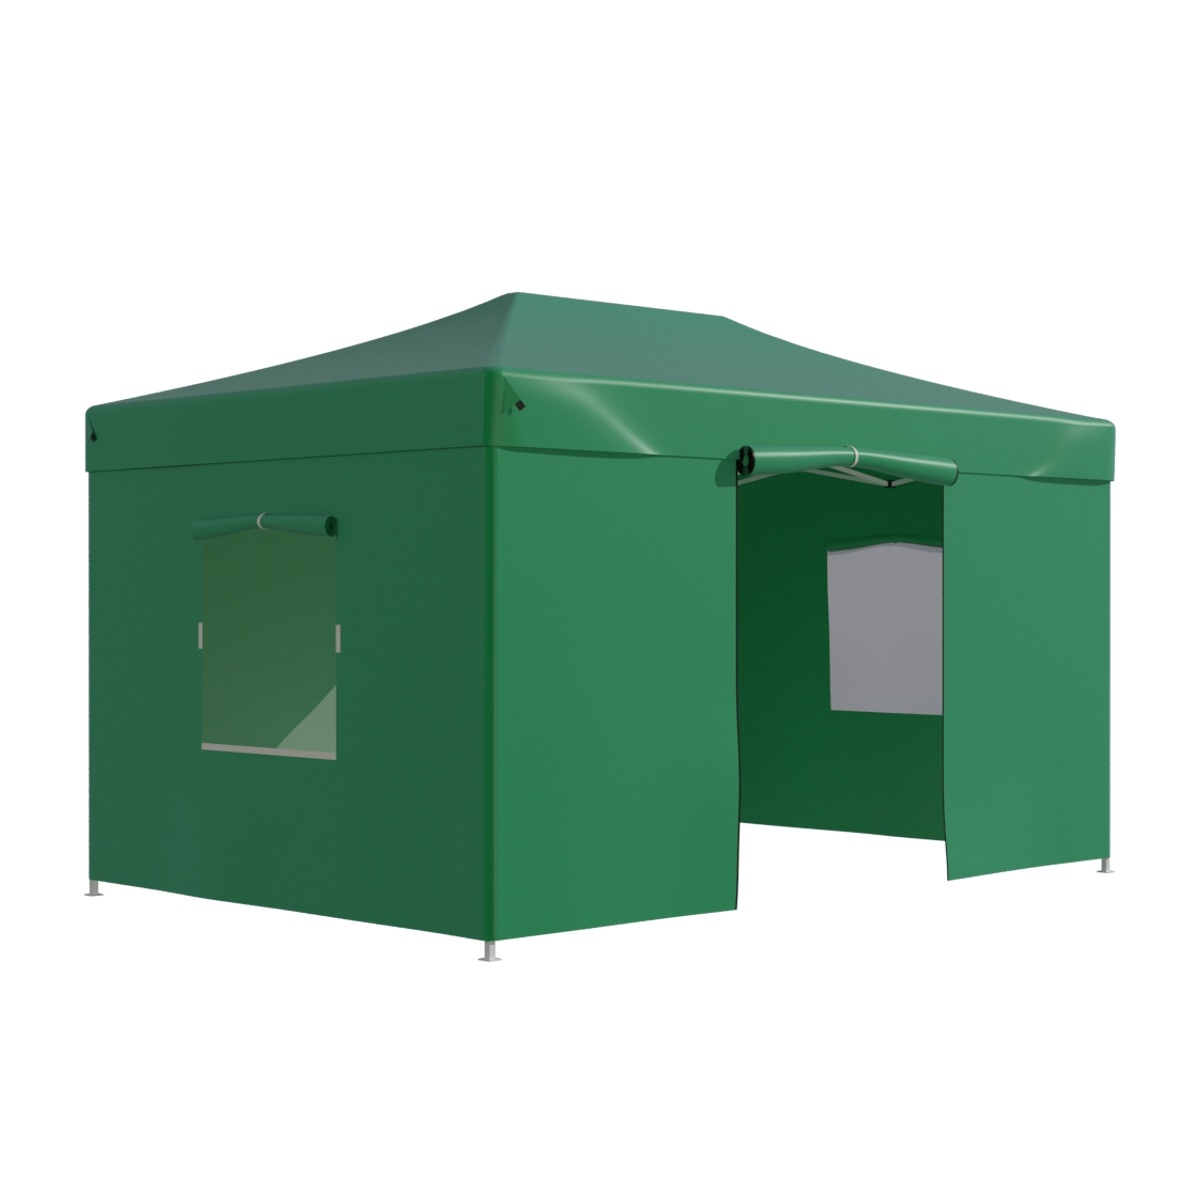 Тент садовый Helex 4336 3x4.5х3м полиэстер зеленый